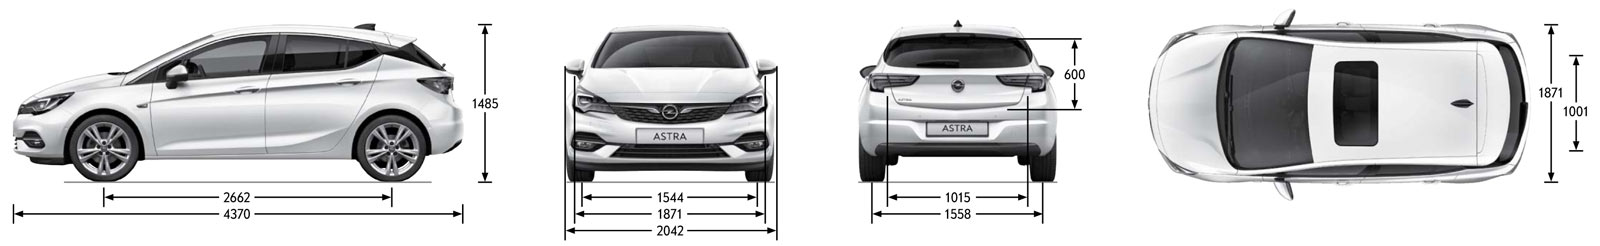 Wymiary nadwozia Opel Astra V hatchback po liftingu